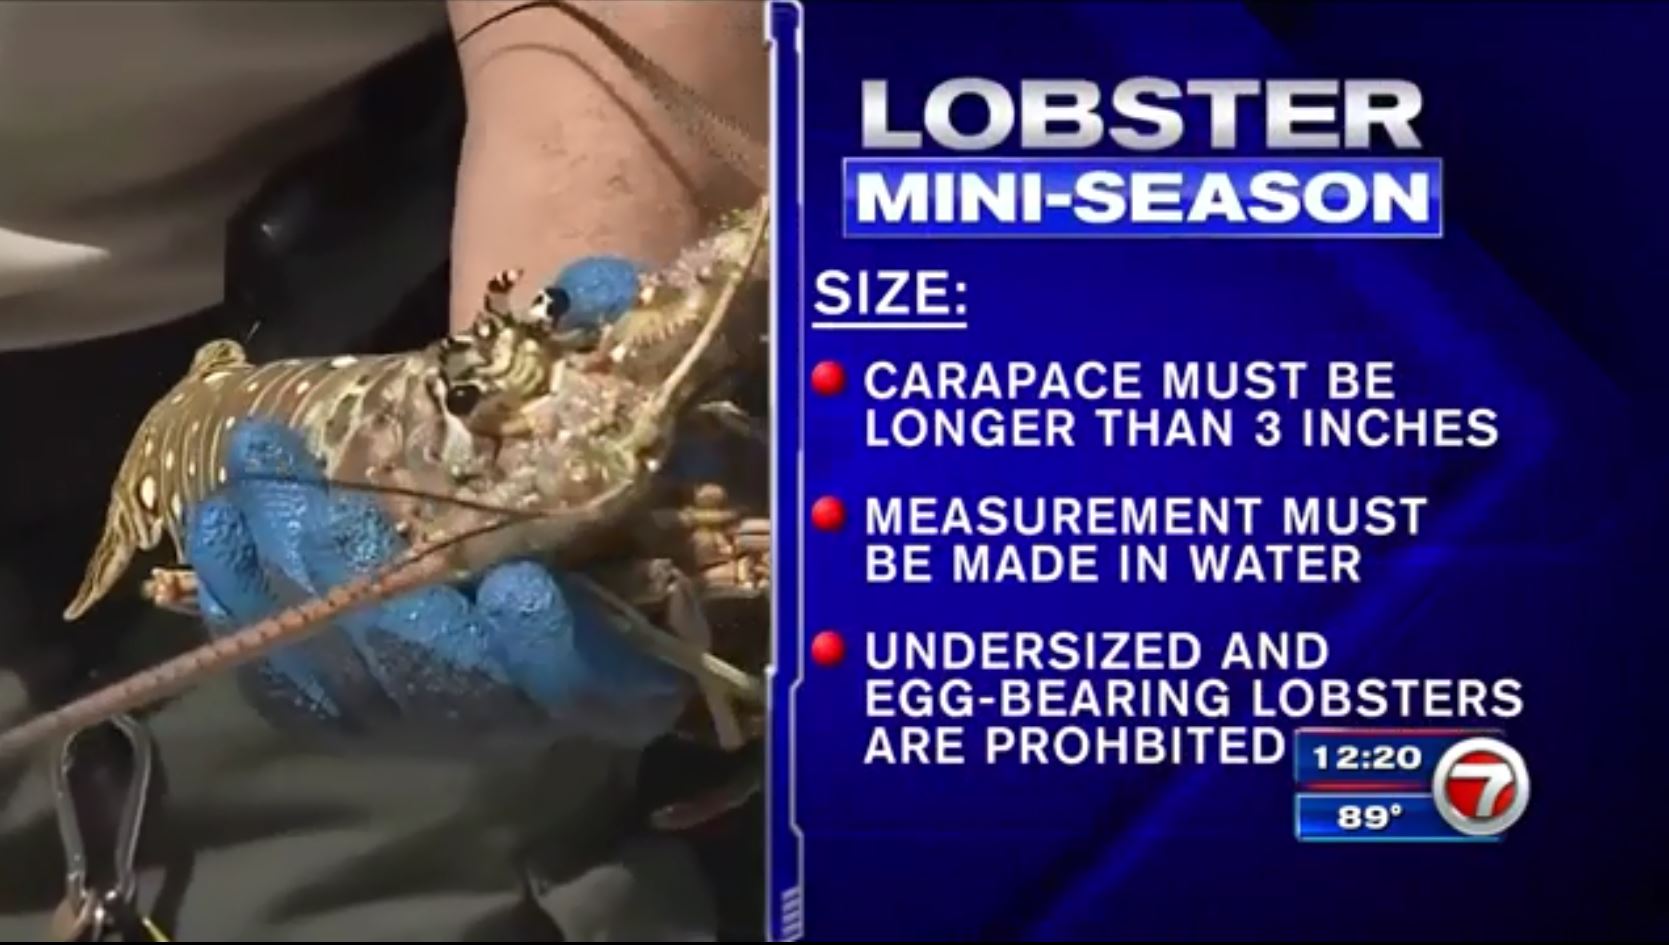 Lobster miniseason begins at midnight across South Florida WSVN